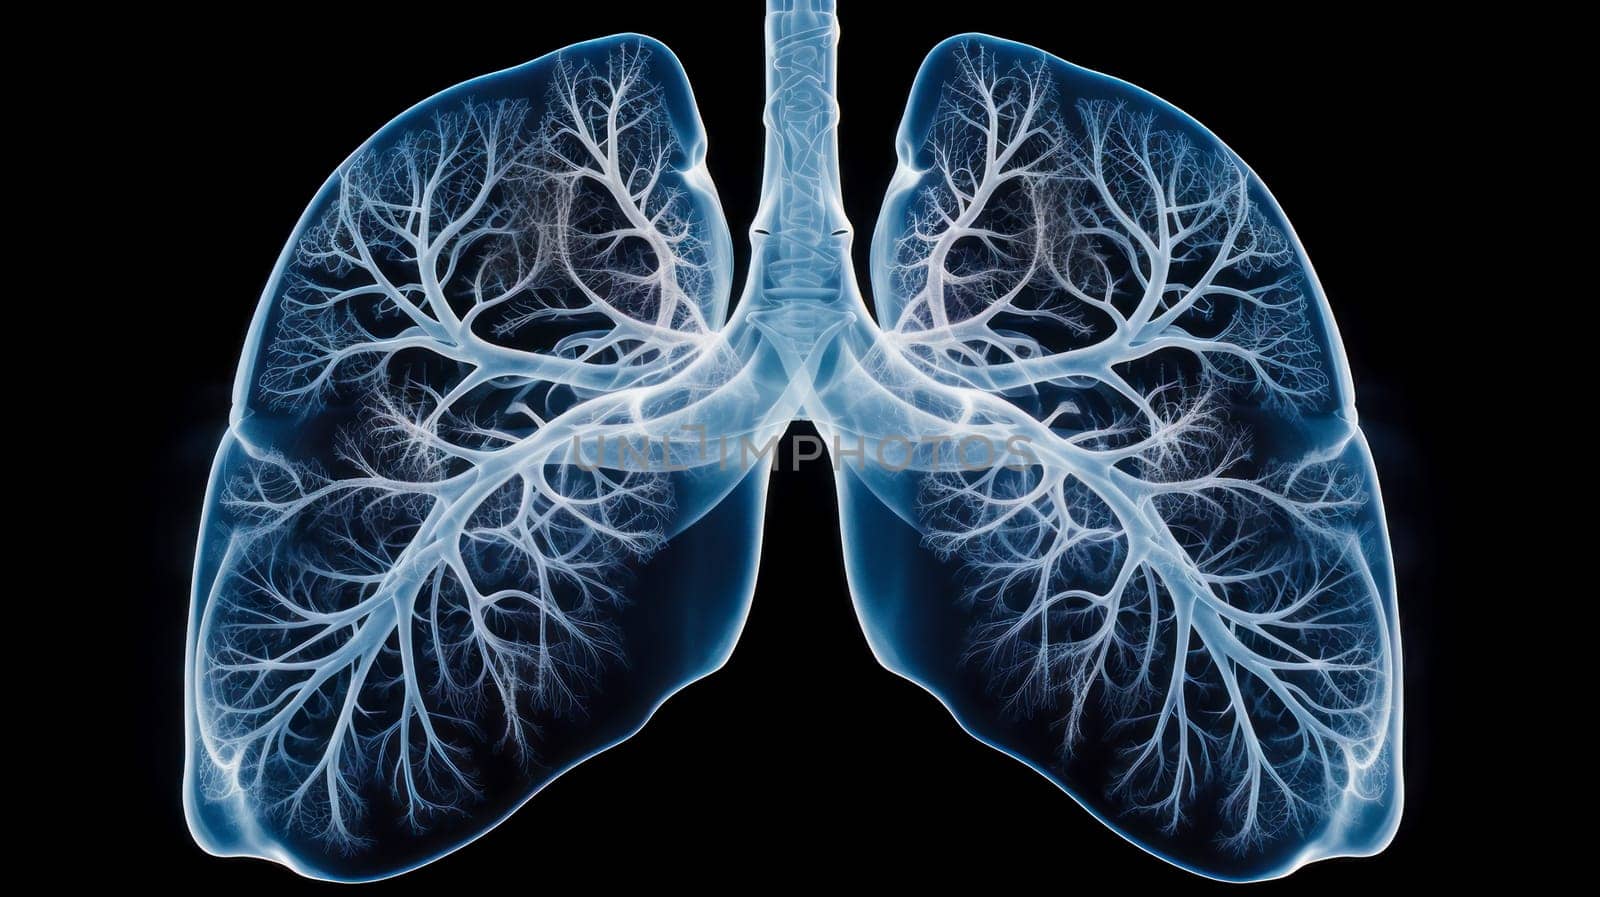 Human lungs on X-ray, human bones on a dark background. by Alla_Yurtayeva